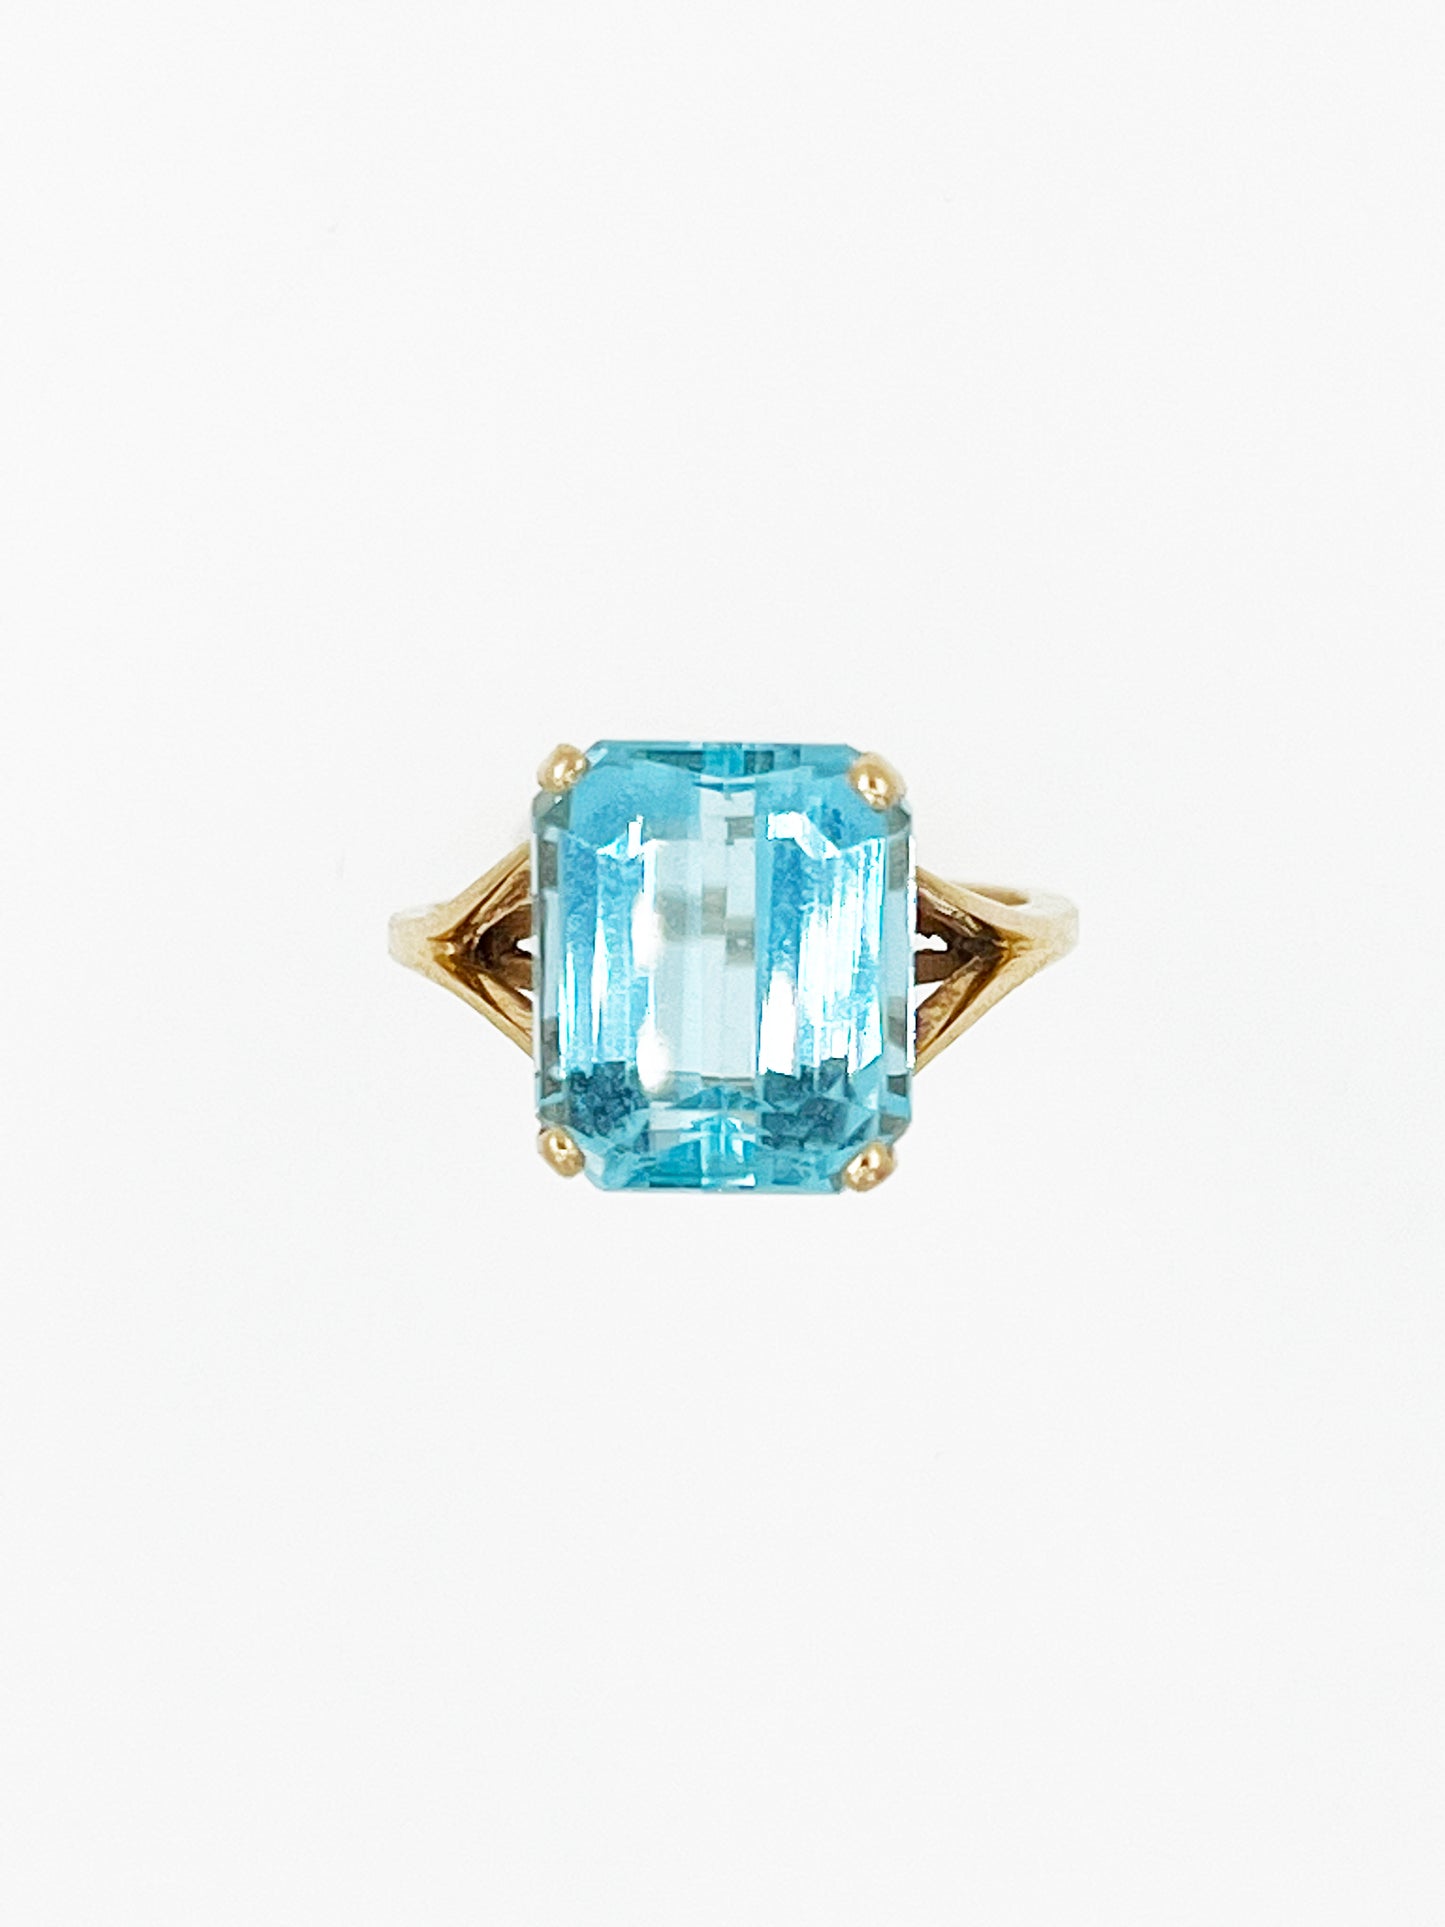 Elegant Emerald Step Cut Blue Topaz Ring in 14k Yellow Gold